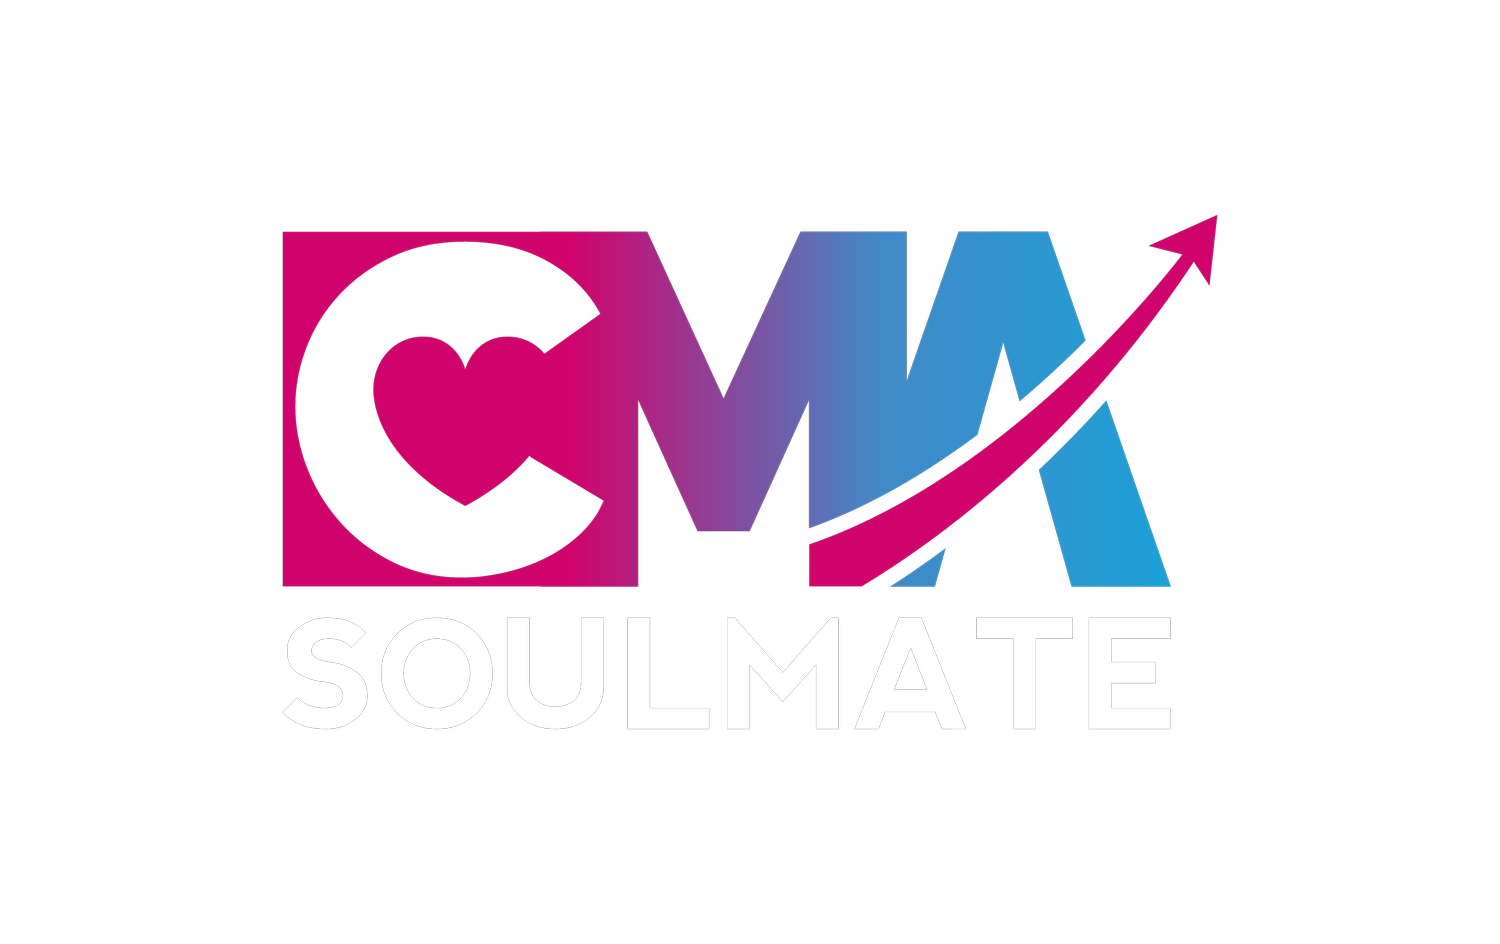 CMA Soulmate